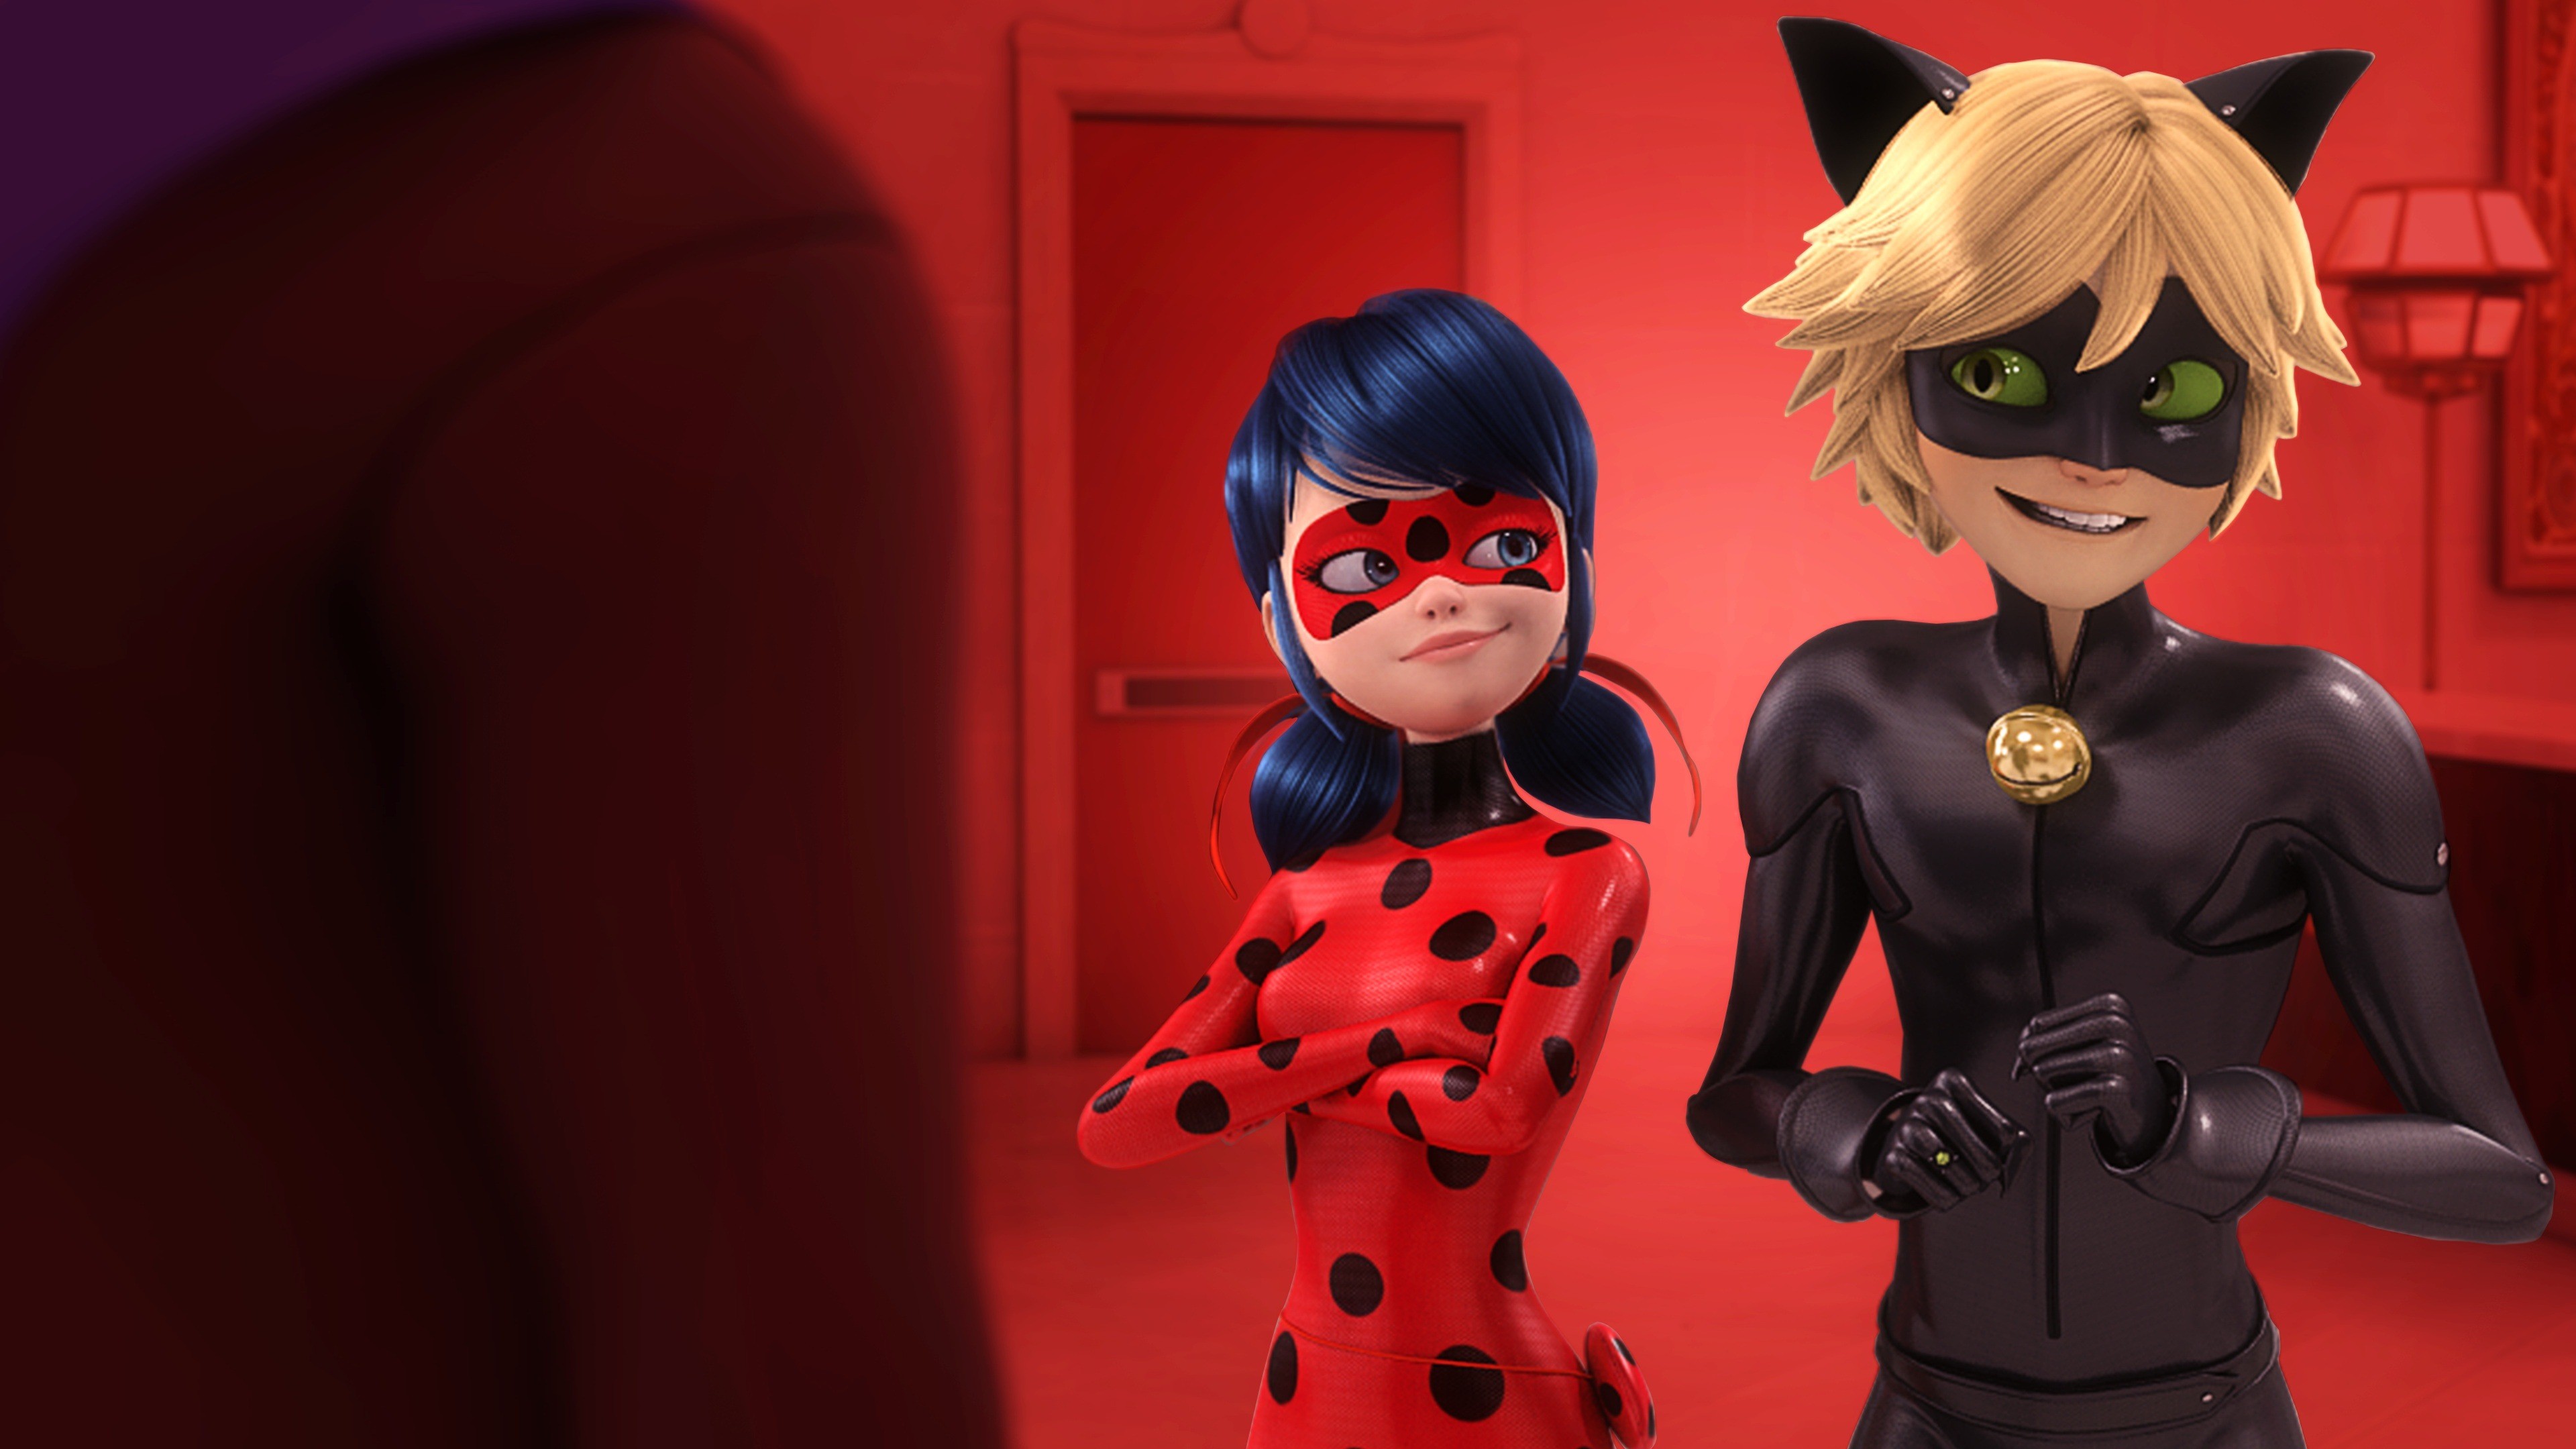 Miraculous: Tales of Ladybug & Cat Noir - Season 5